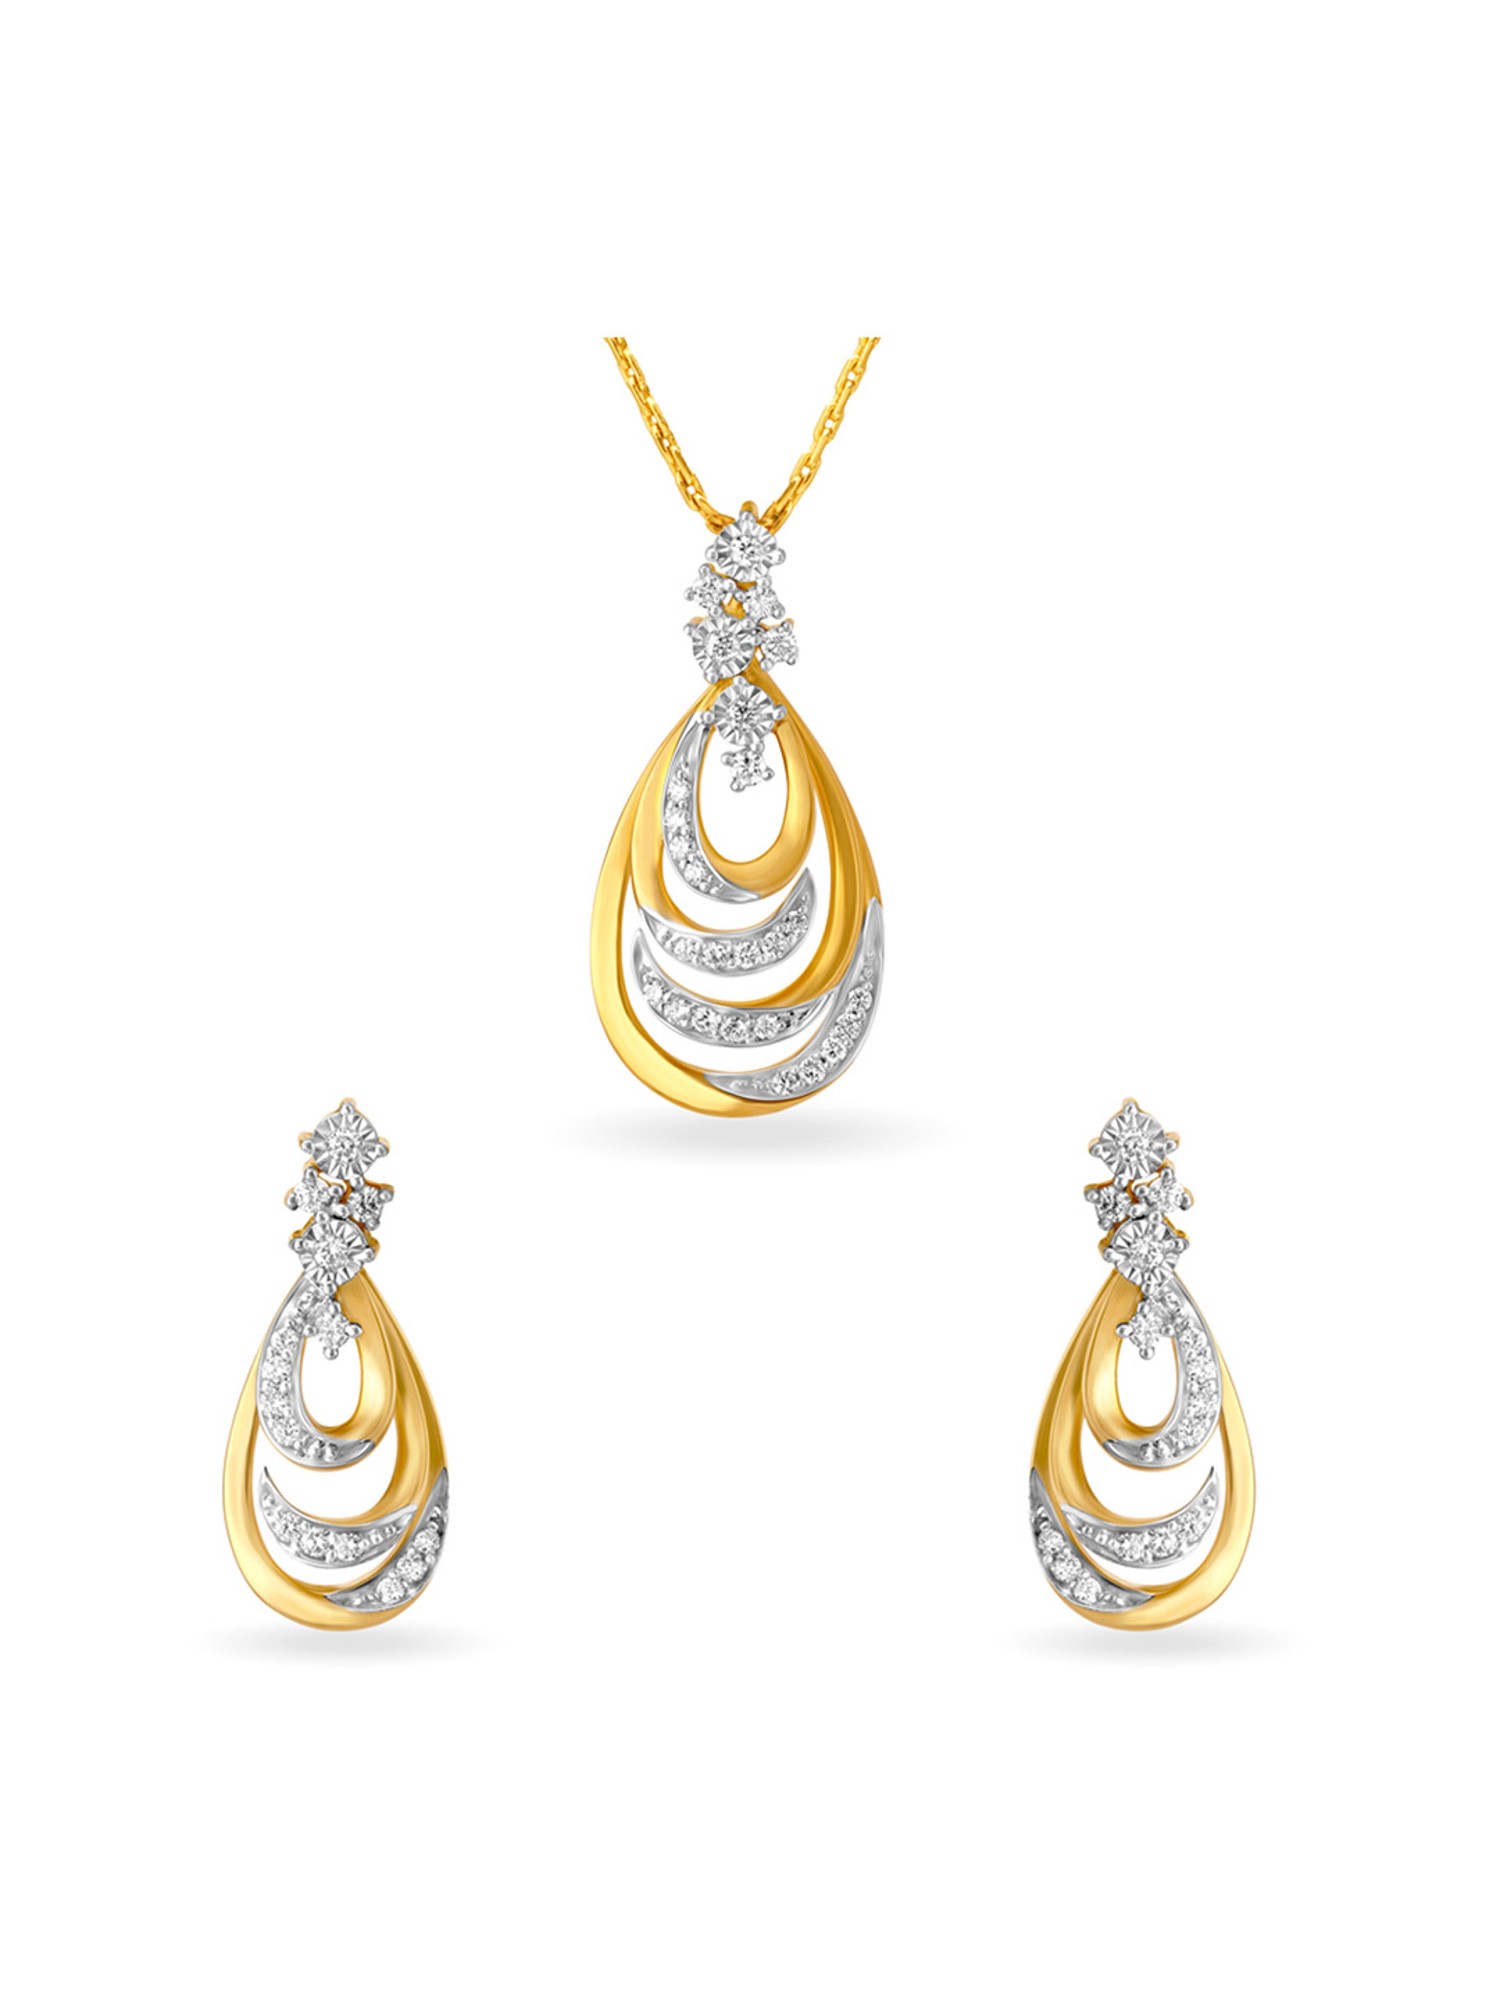 Stunning Diamond Pendant and Earrings Set